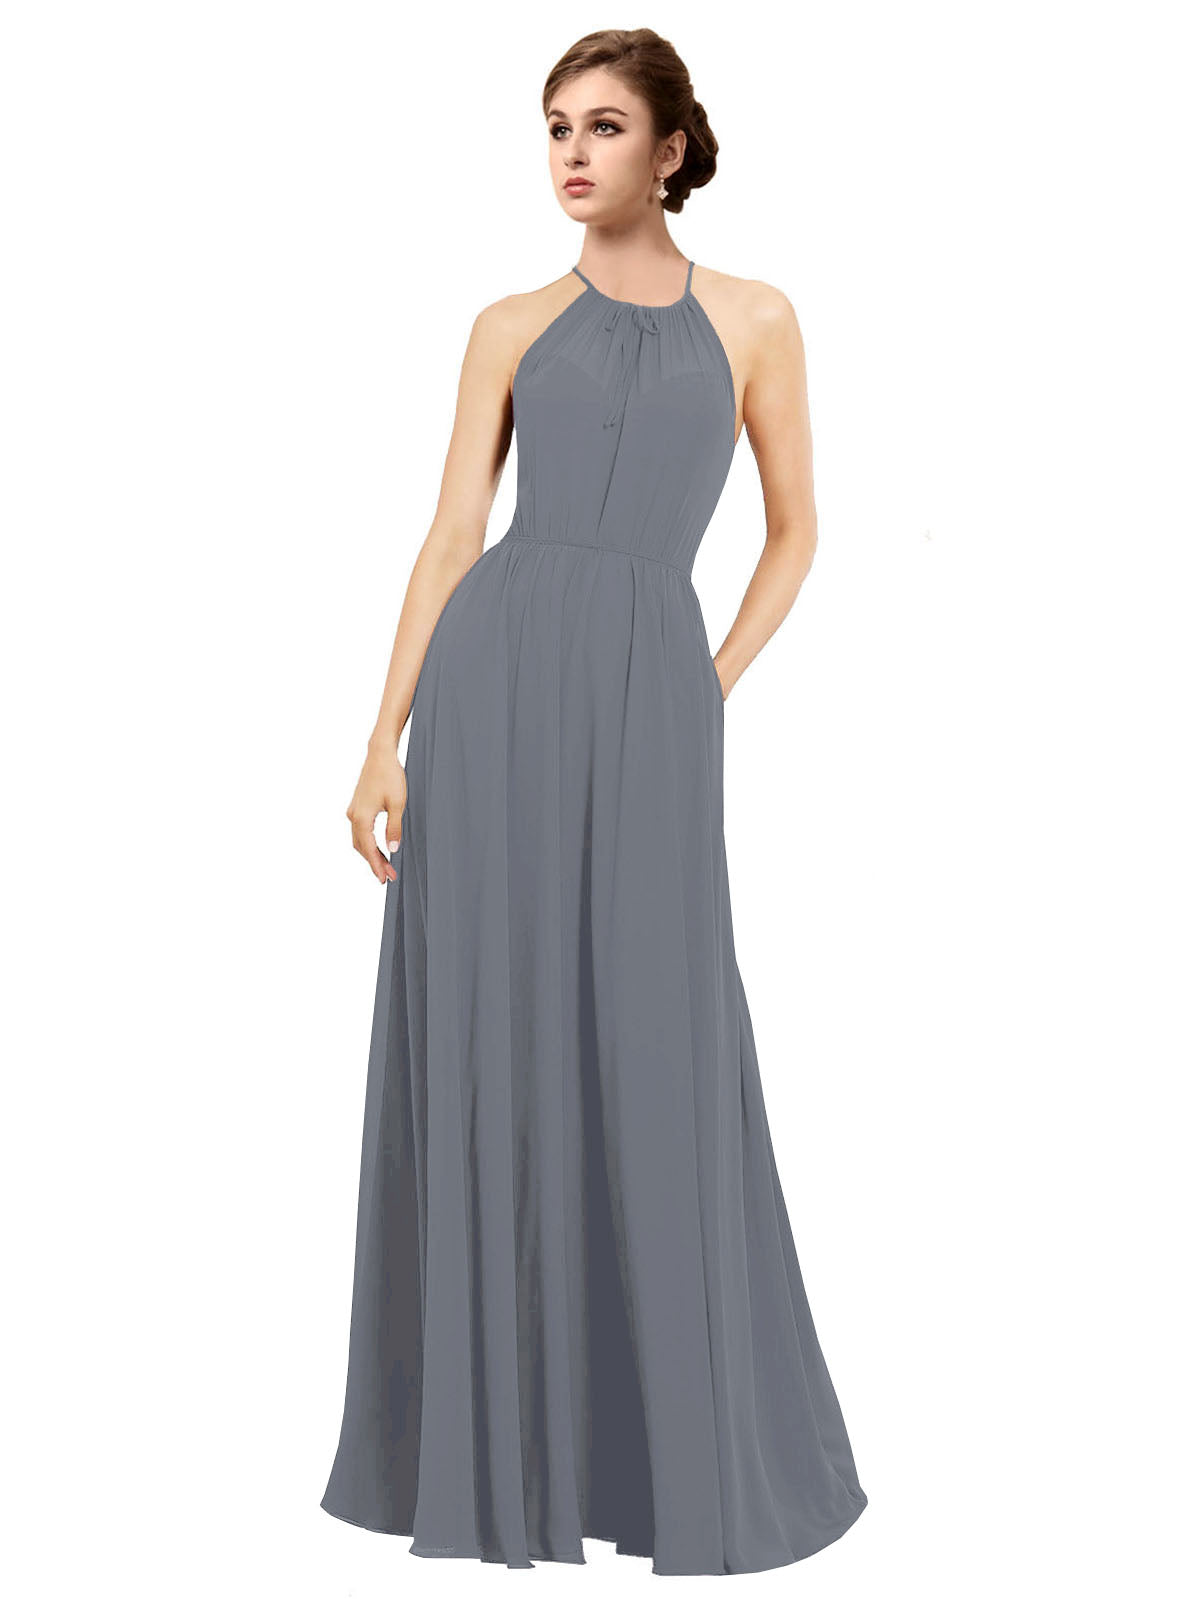 Slate Grey A-Line Halter Sleeveless Long Bridesmaid Dress Taylor